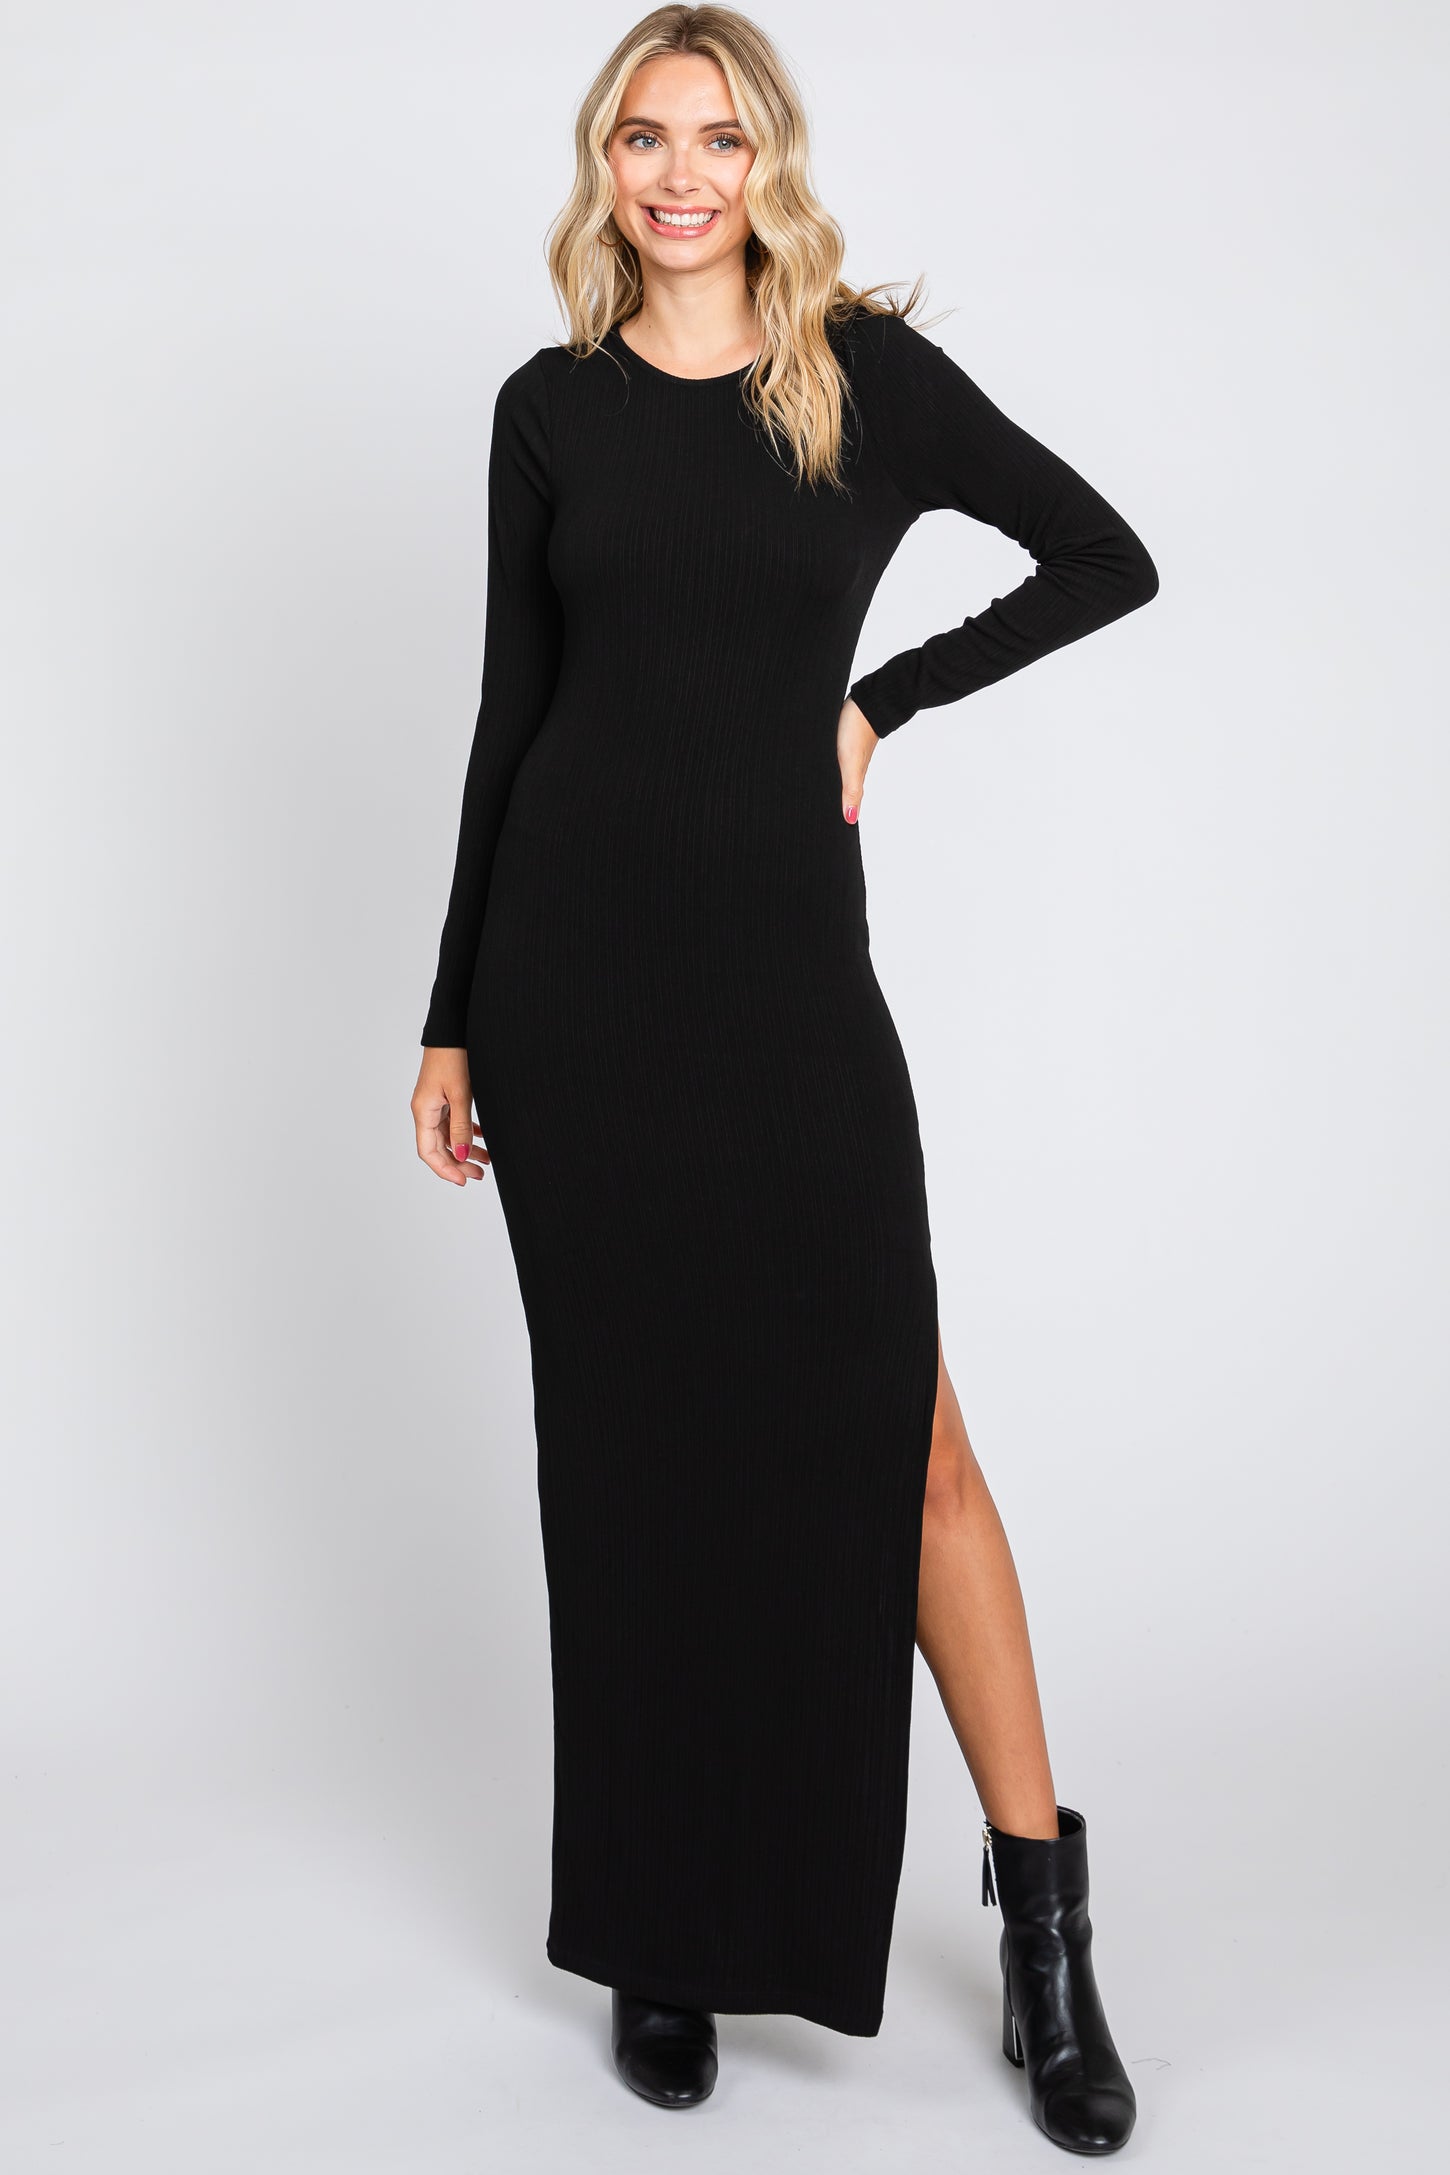 Black Ribbed Long Sleeve Side Slit Maxi Dress